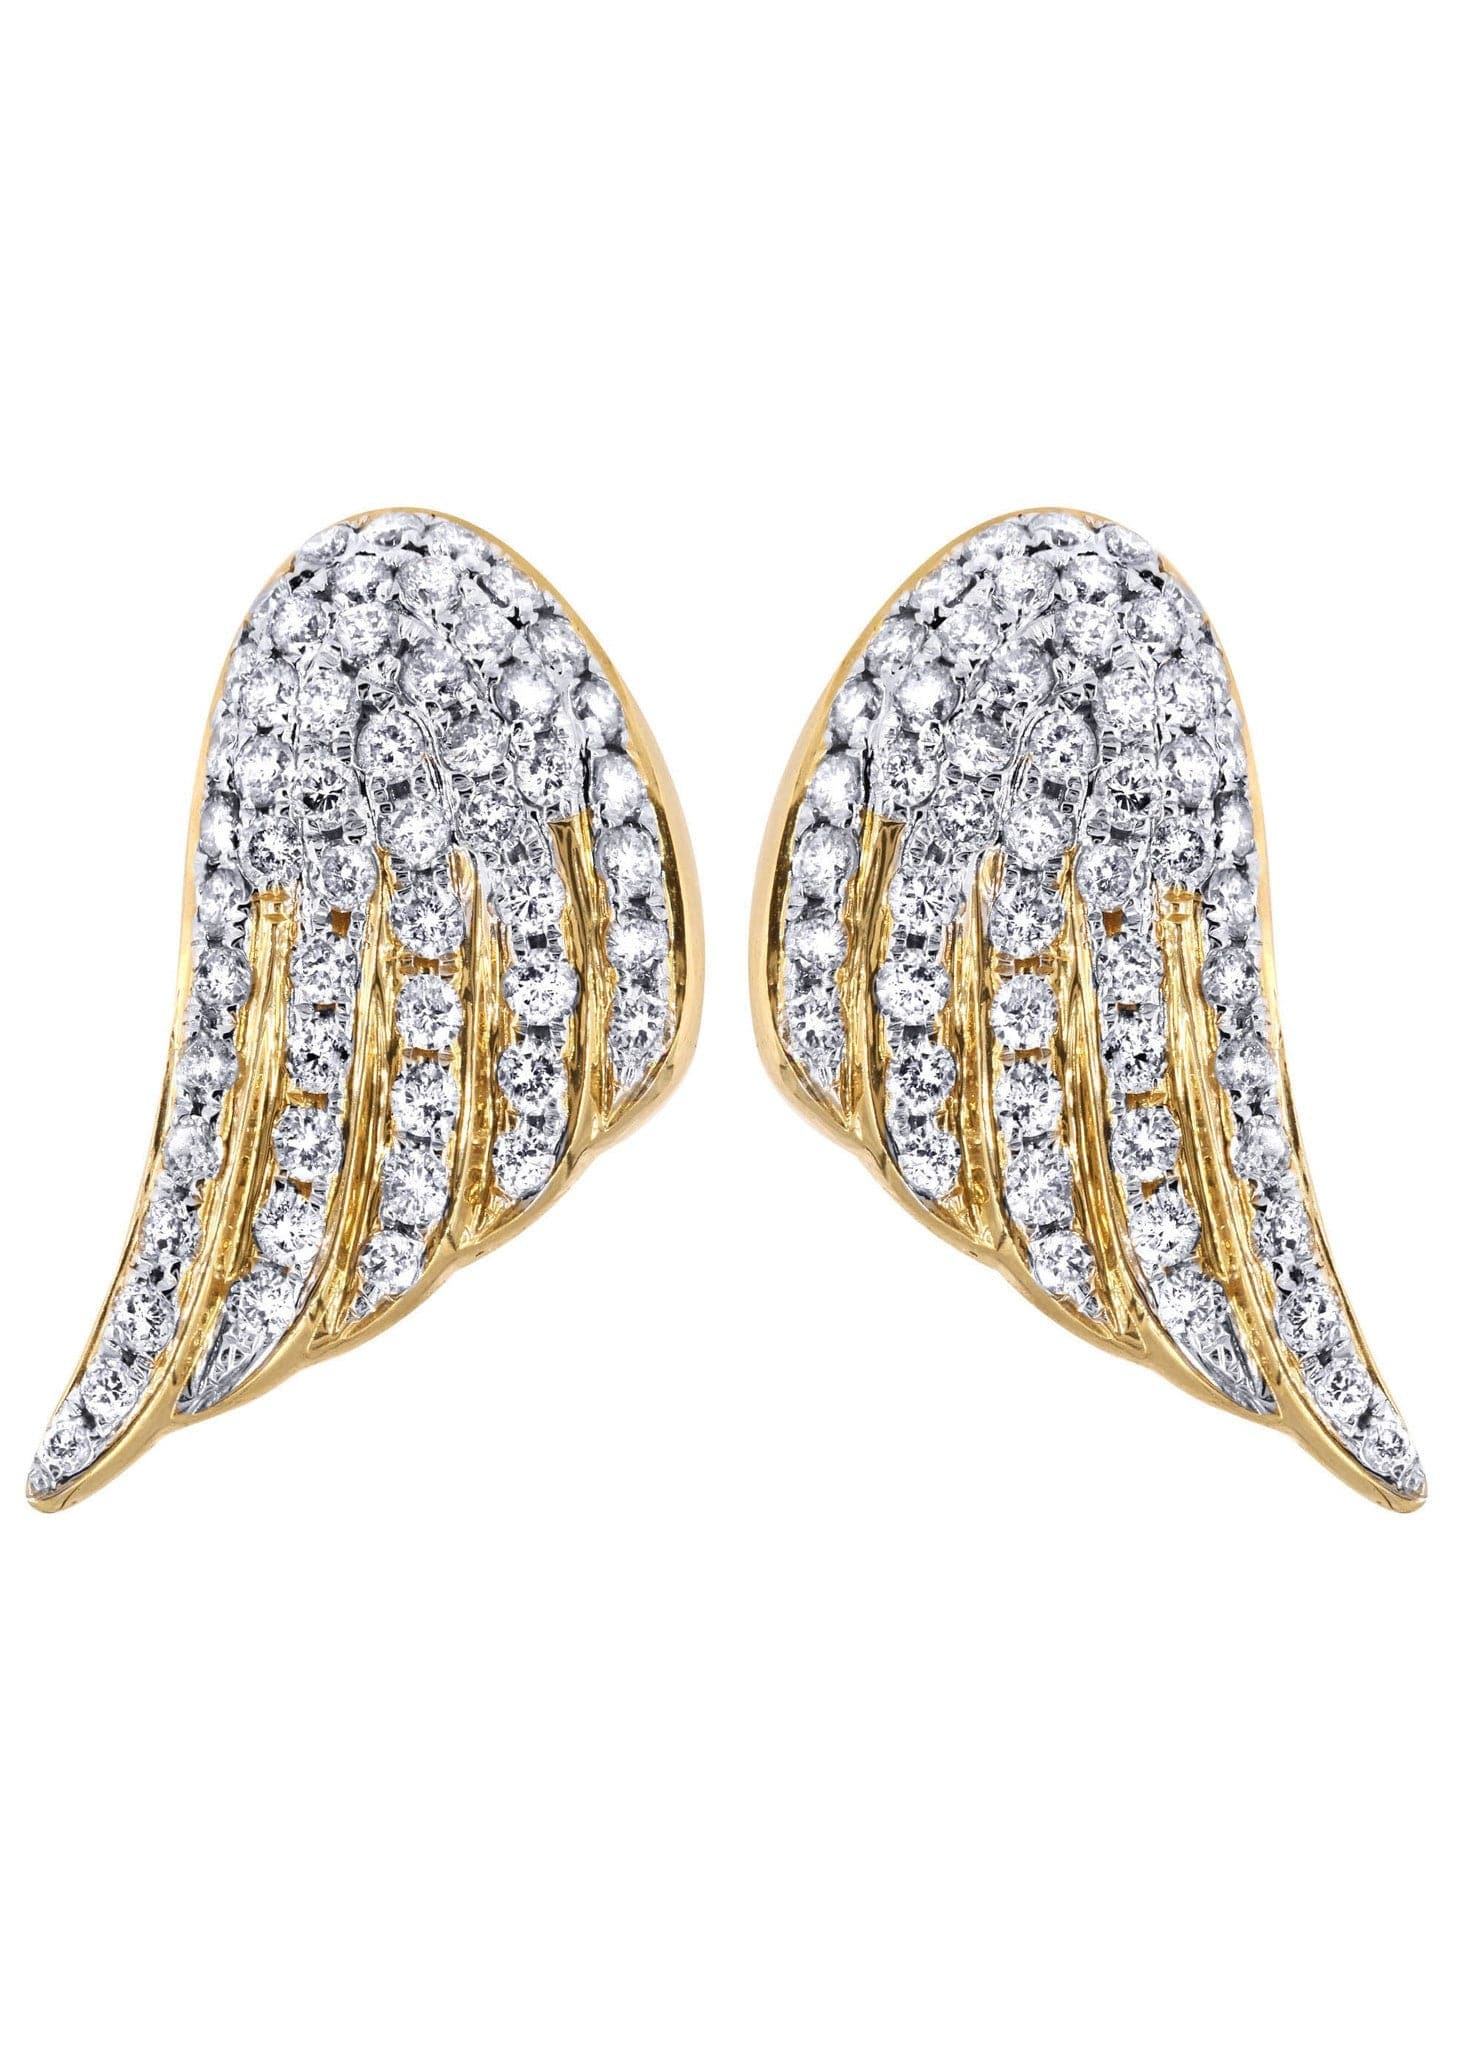 Diamond Earrings For Men 14k Yellow Gold 1 56 Carats Frostnyc